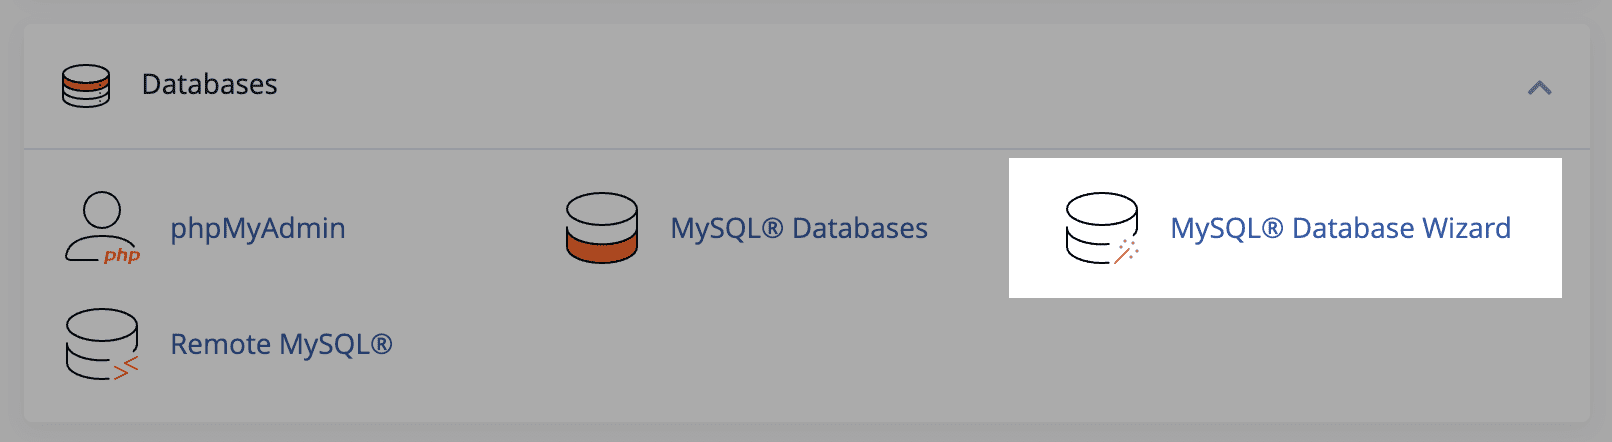 mysql database wizard